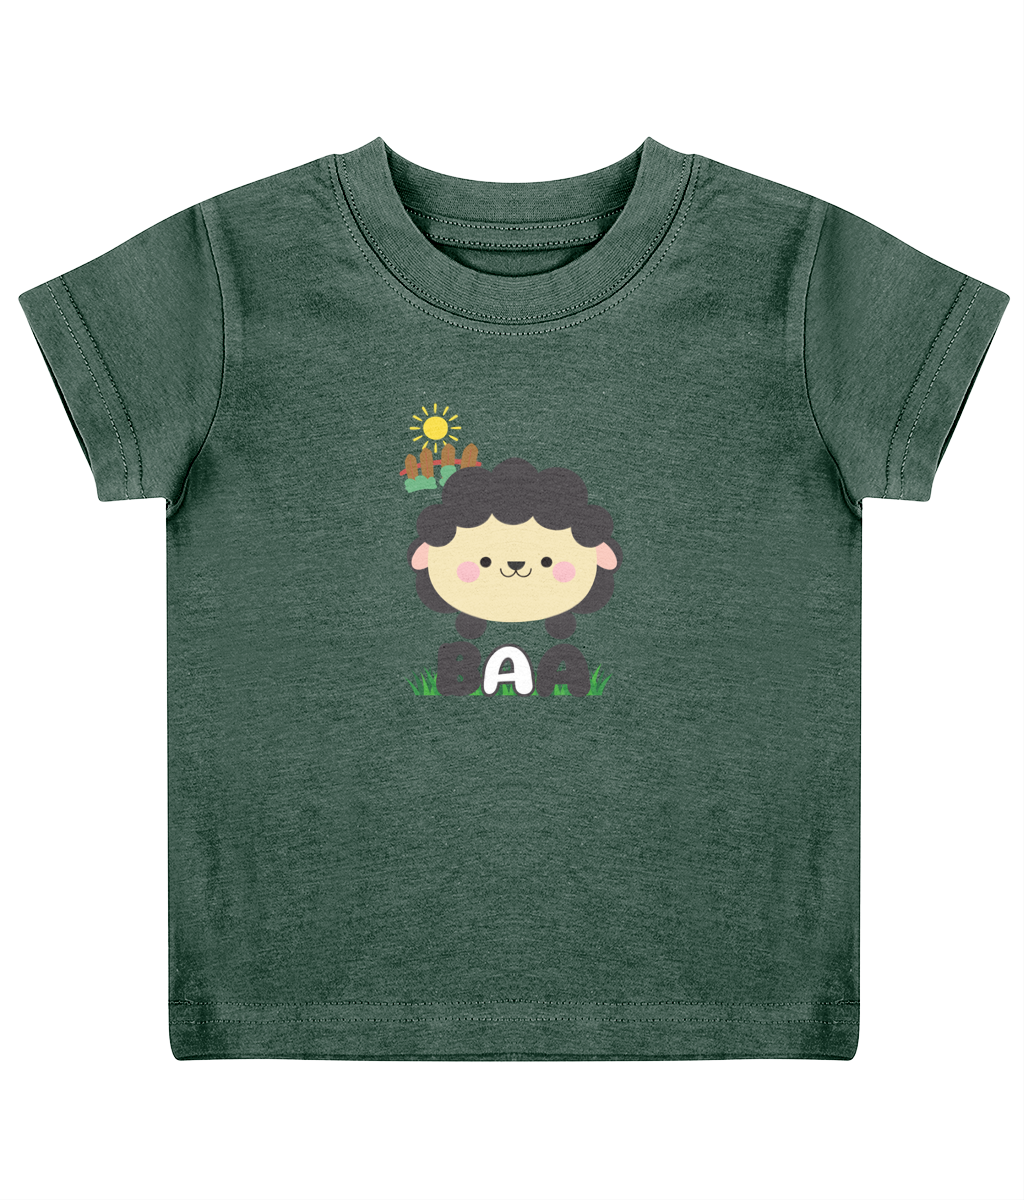 Baa Sheep Welsh Language Child's T-Shirt | Welsh Children's Clothes